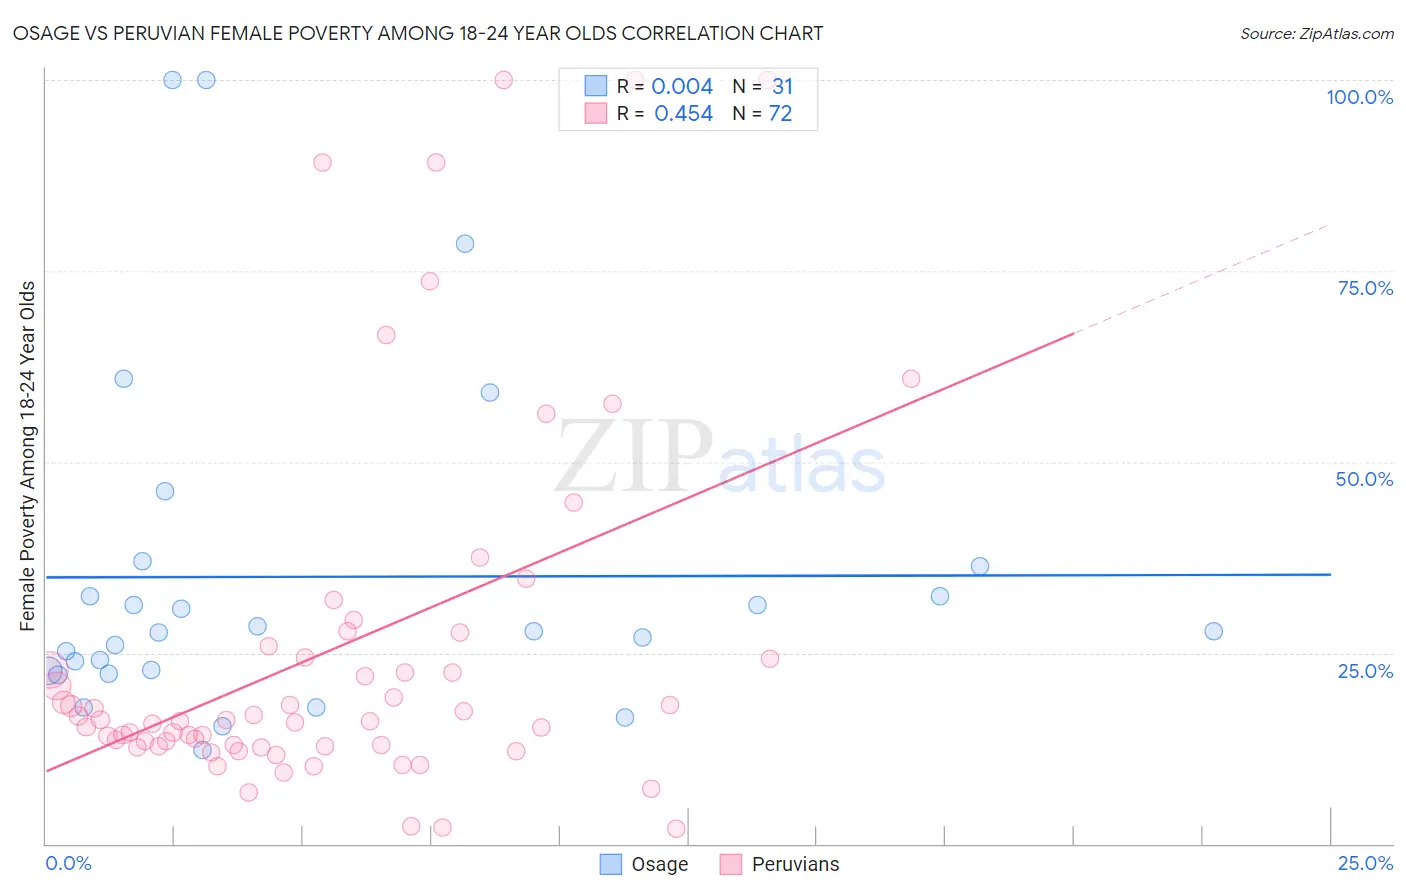 Osage vs Peruvian Female Poverty Among 18-24 Year Olds